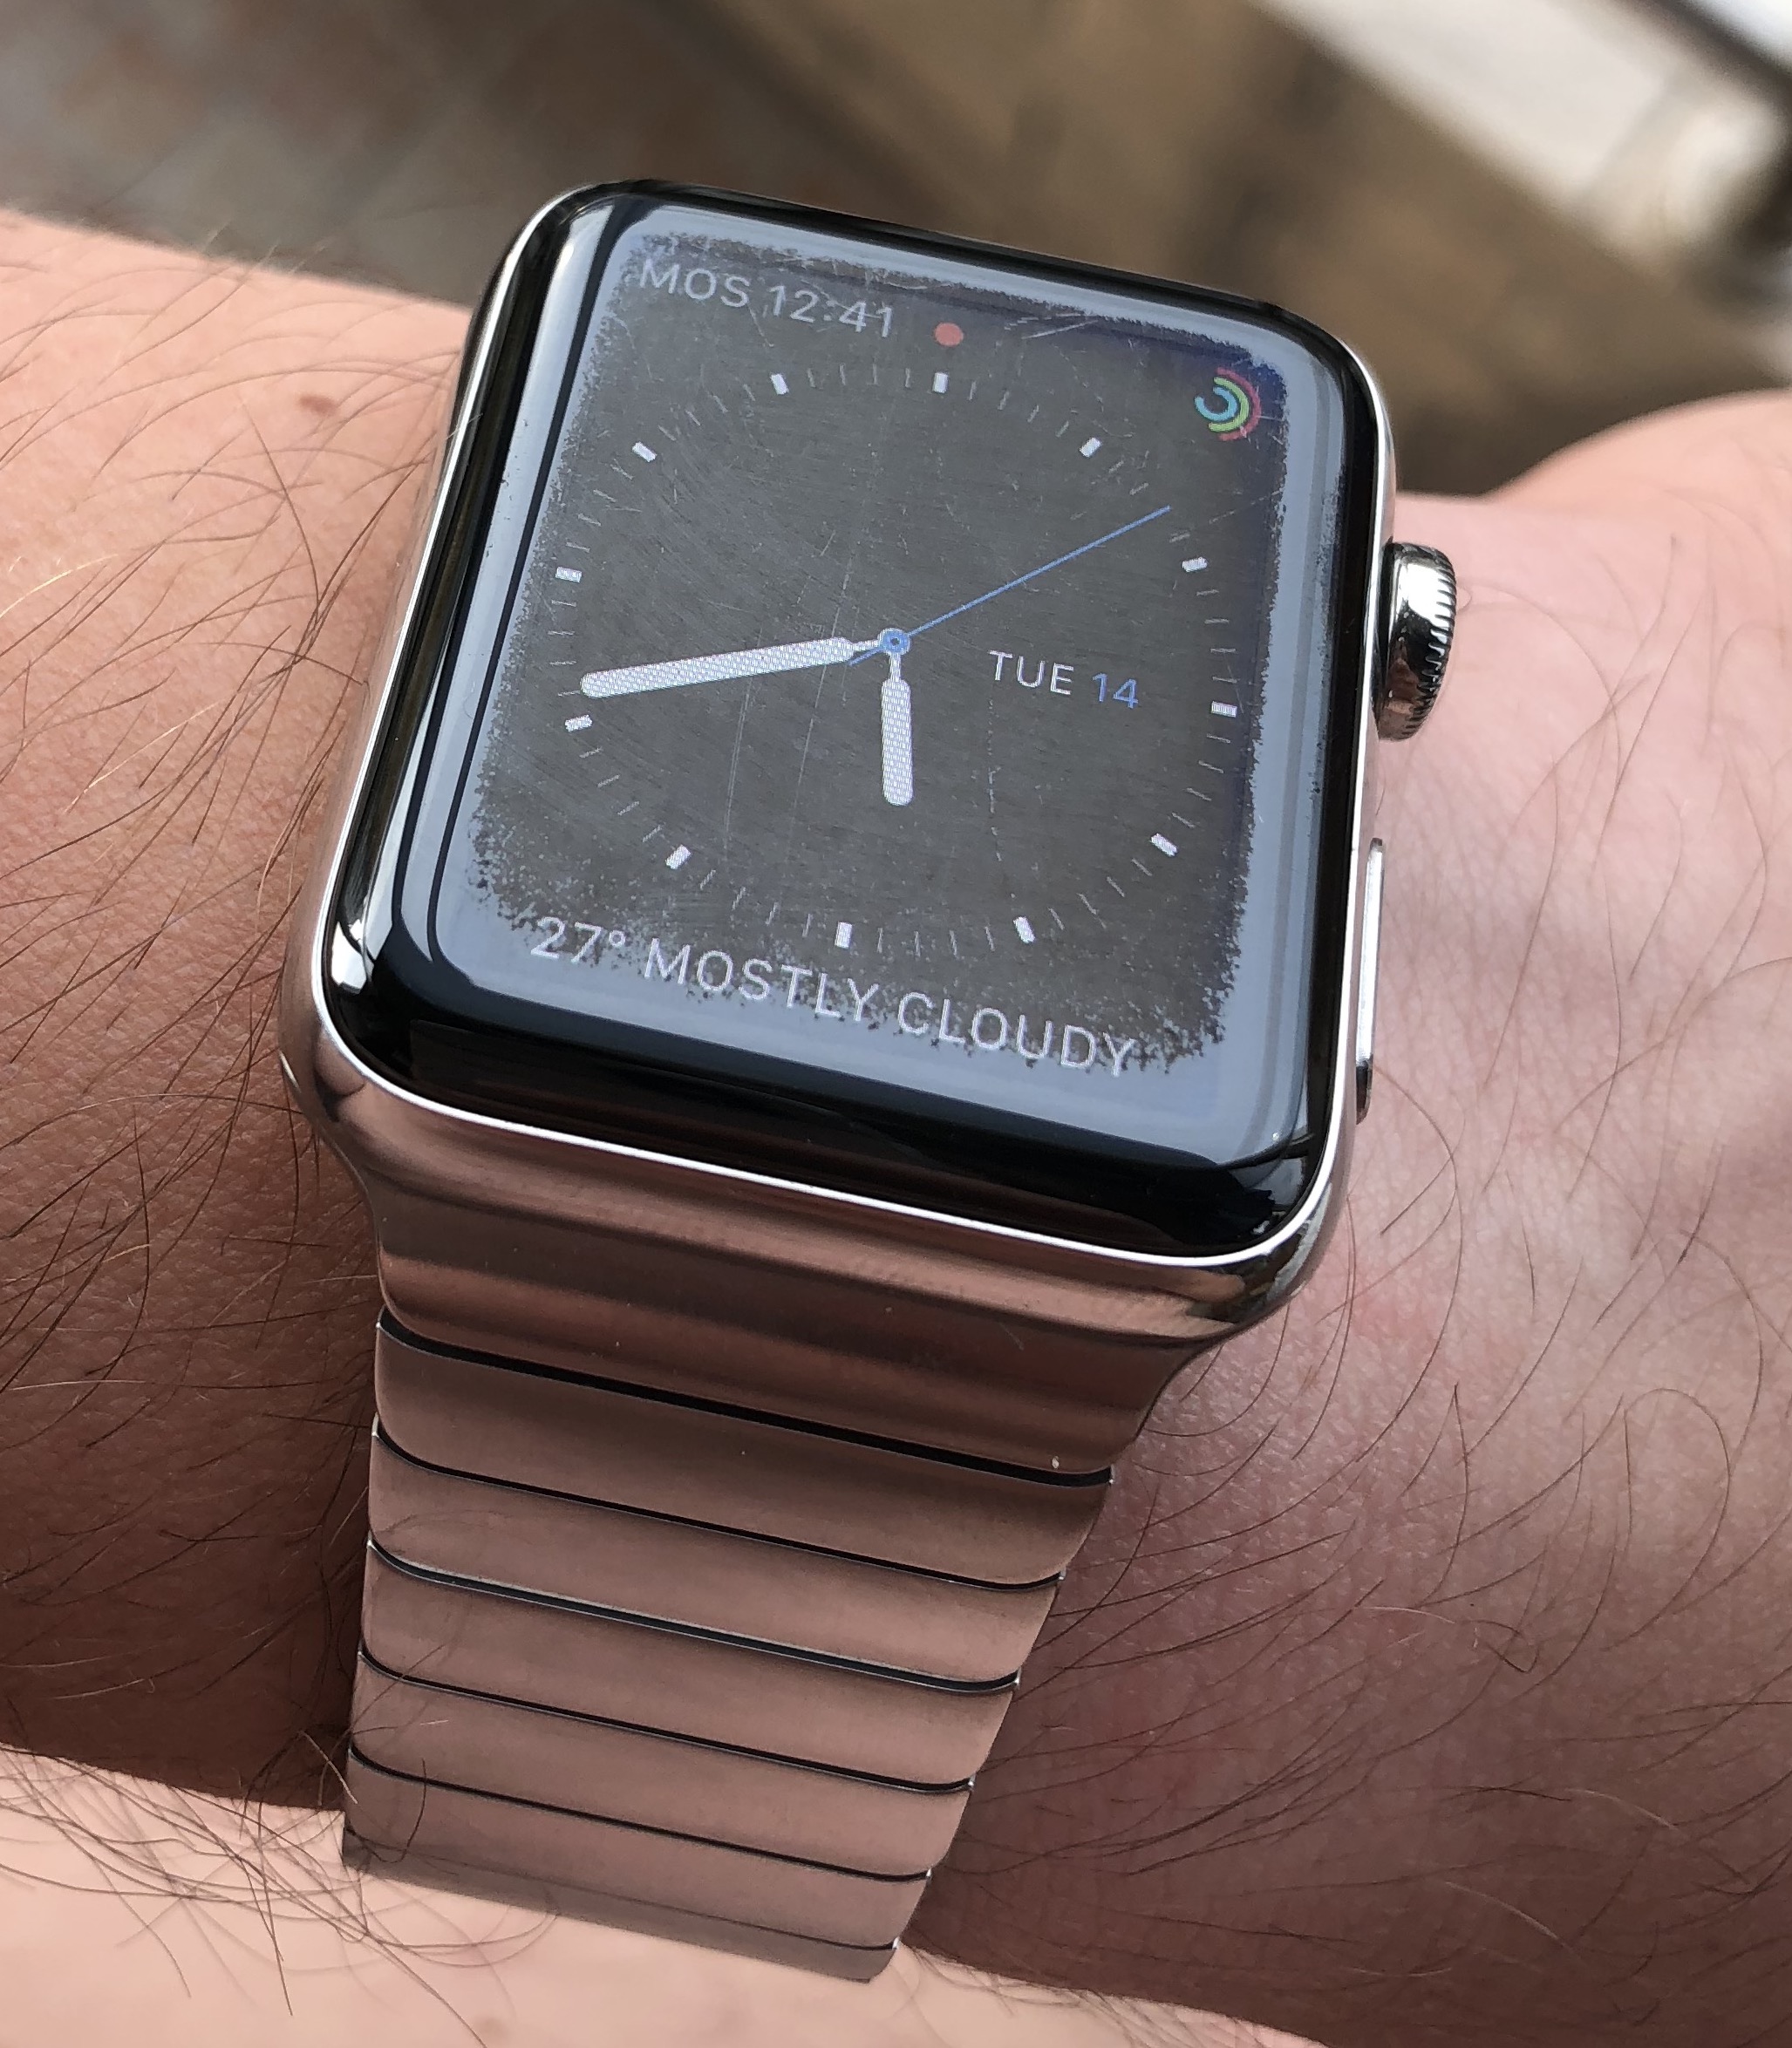 Apple Watch S3 lost the oleophobic coating - Apple Community